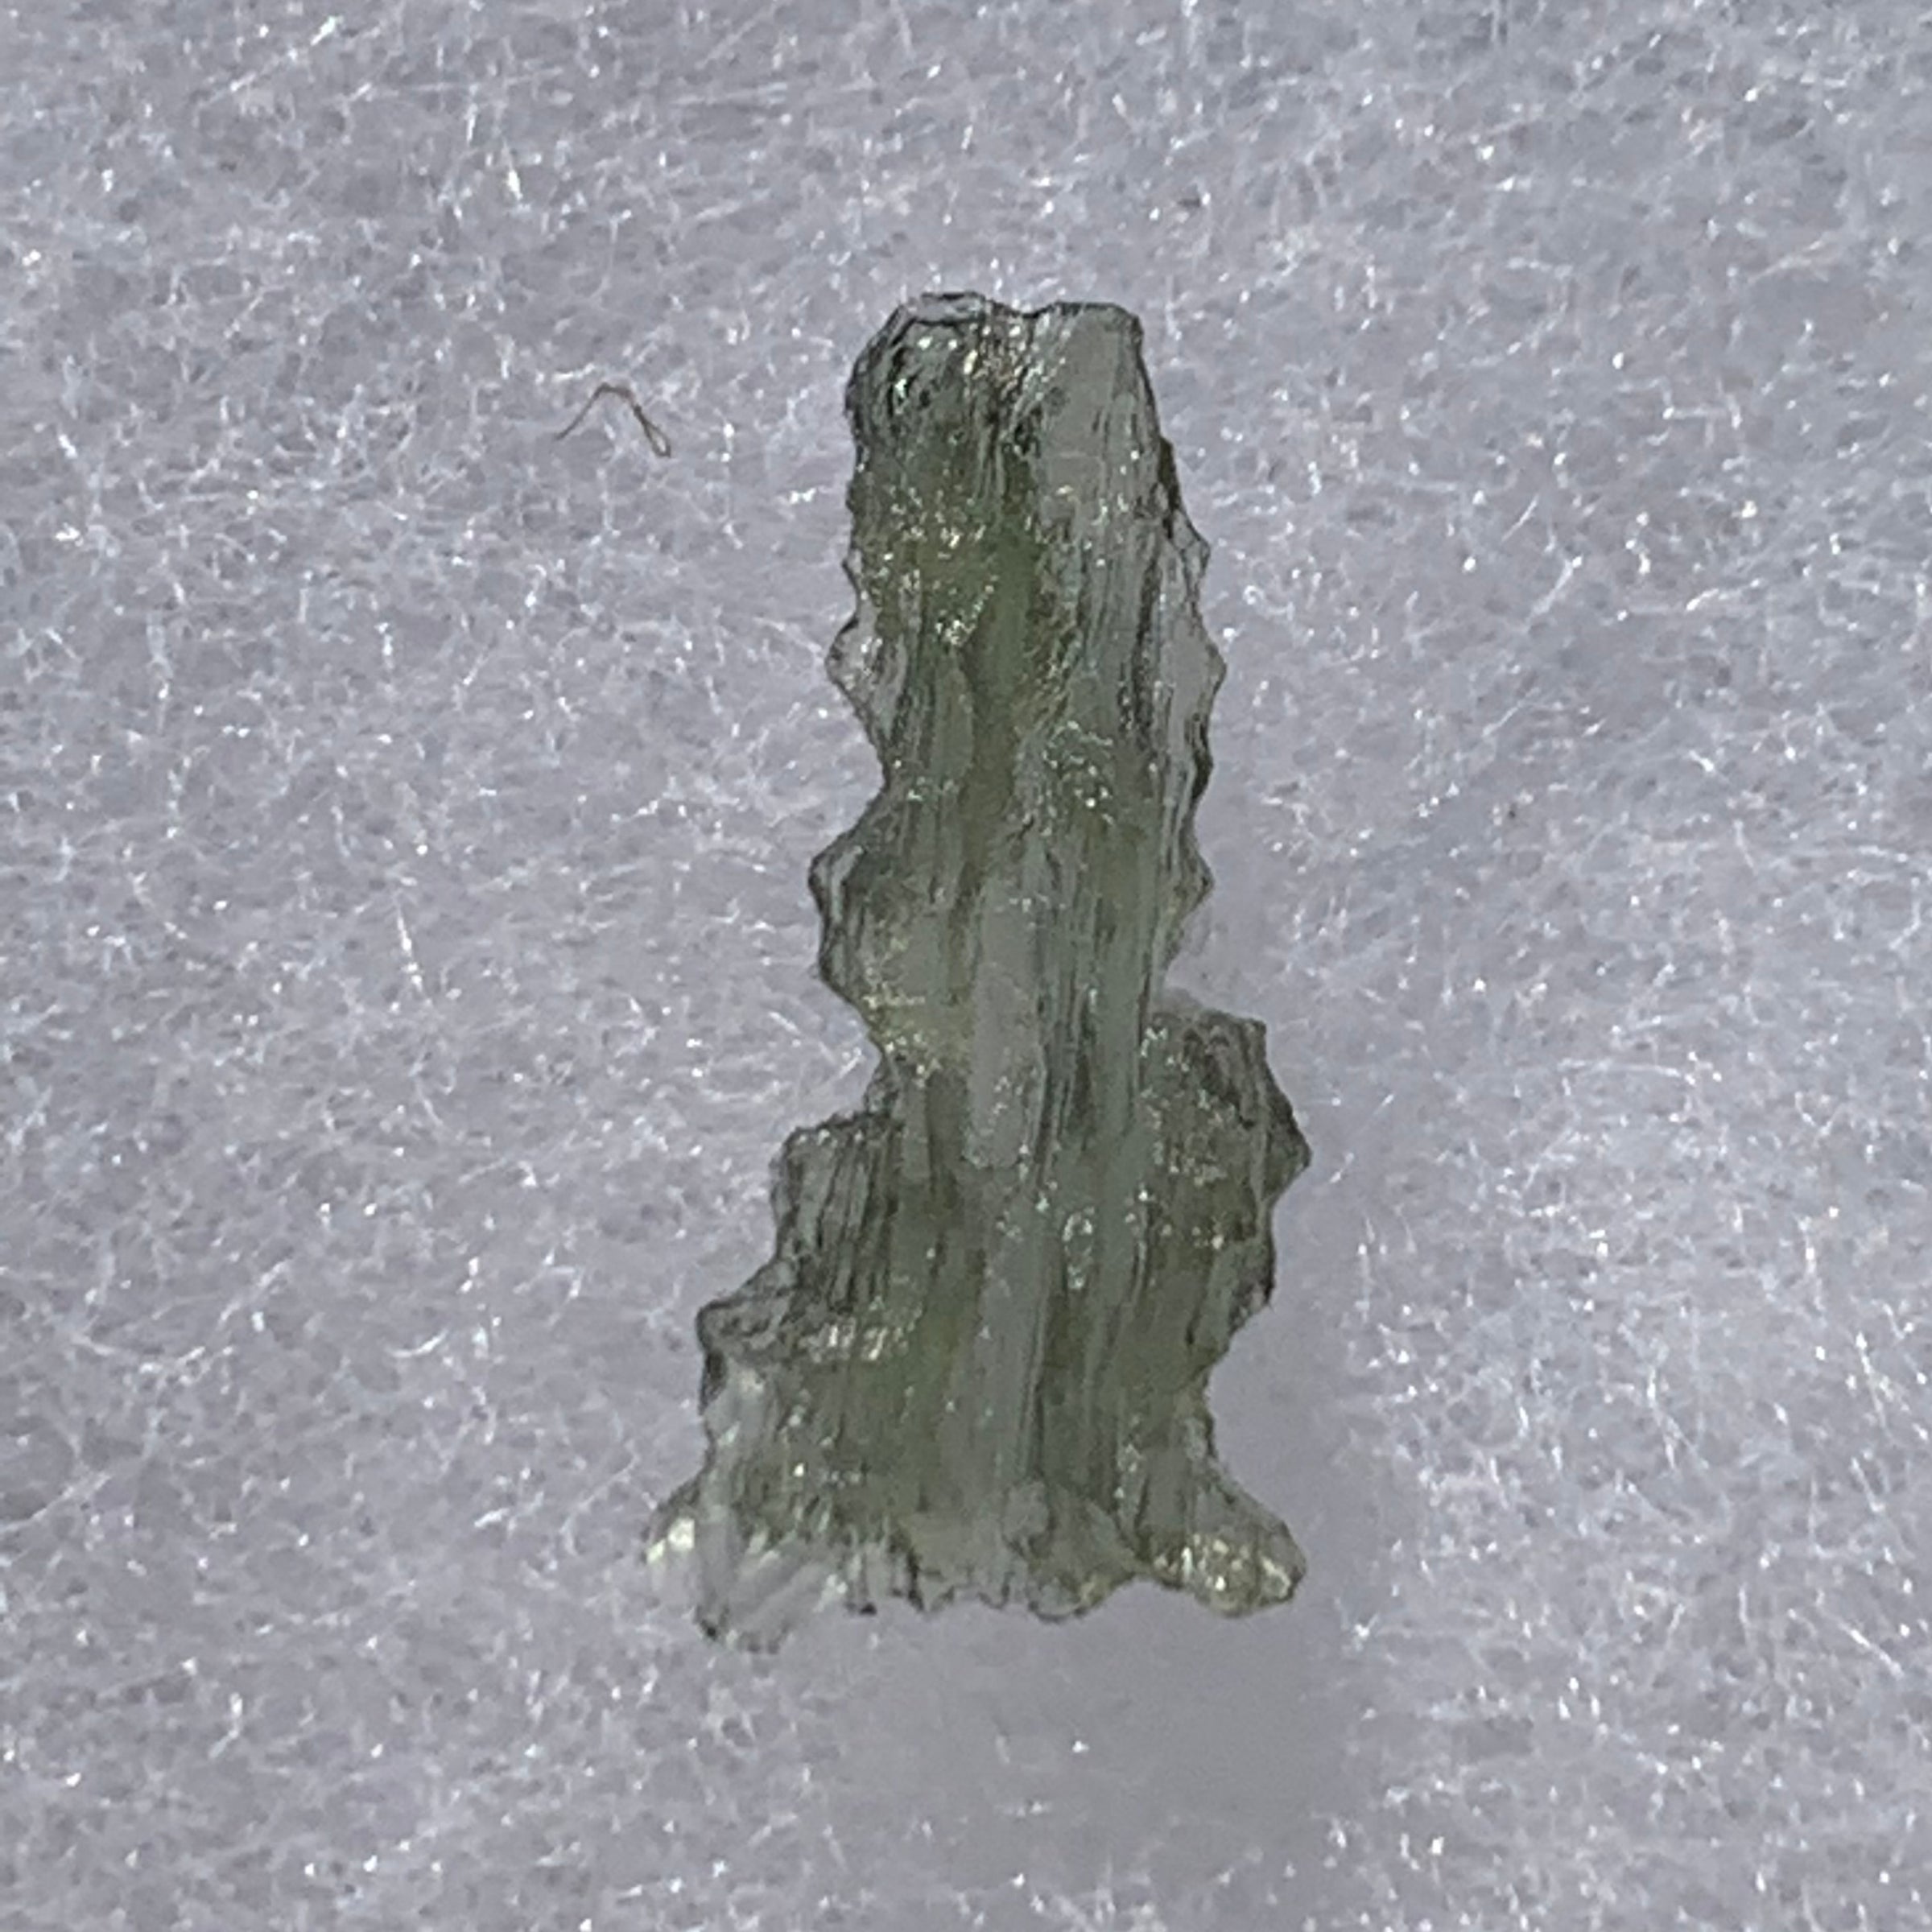 Small Besednice Moldavite Genuine Certified 0.5 grams